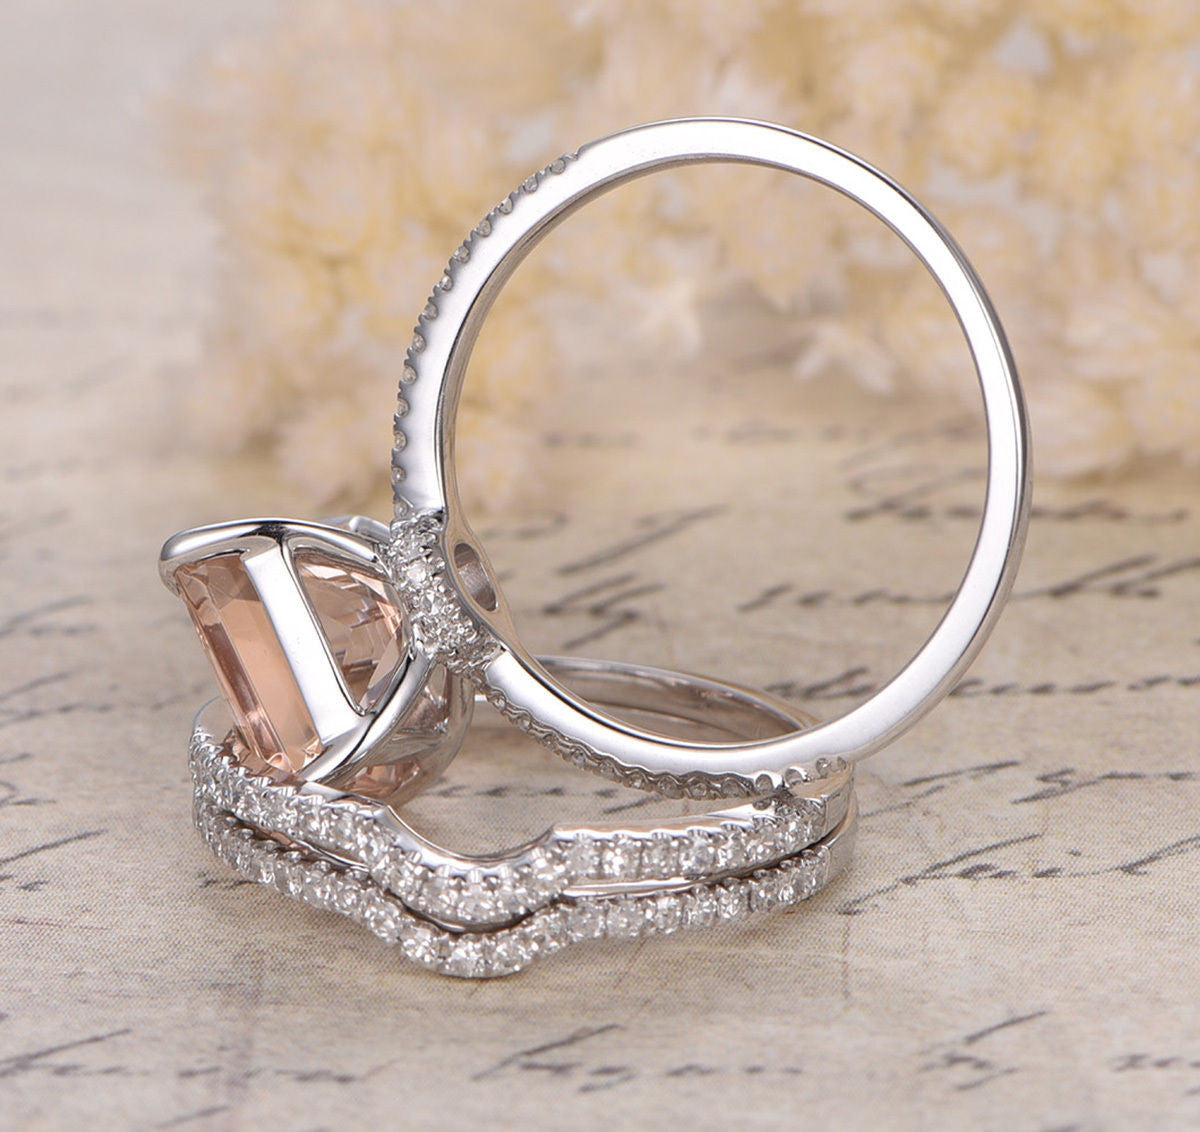 Princess Morganite Engagement Ring 3 Bridal Set Pave Diamond Wedding 14K White Gold 8mm - Lord of Gem Rings - 4